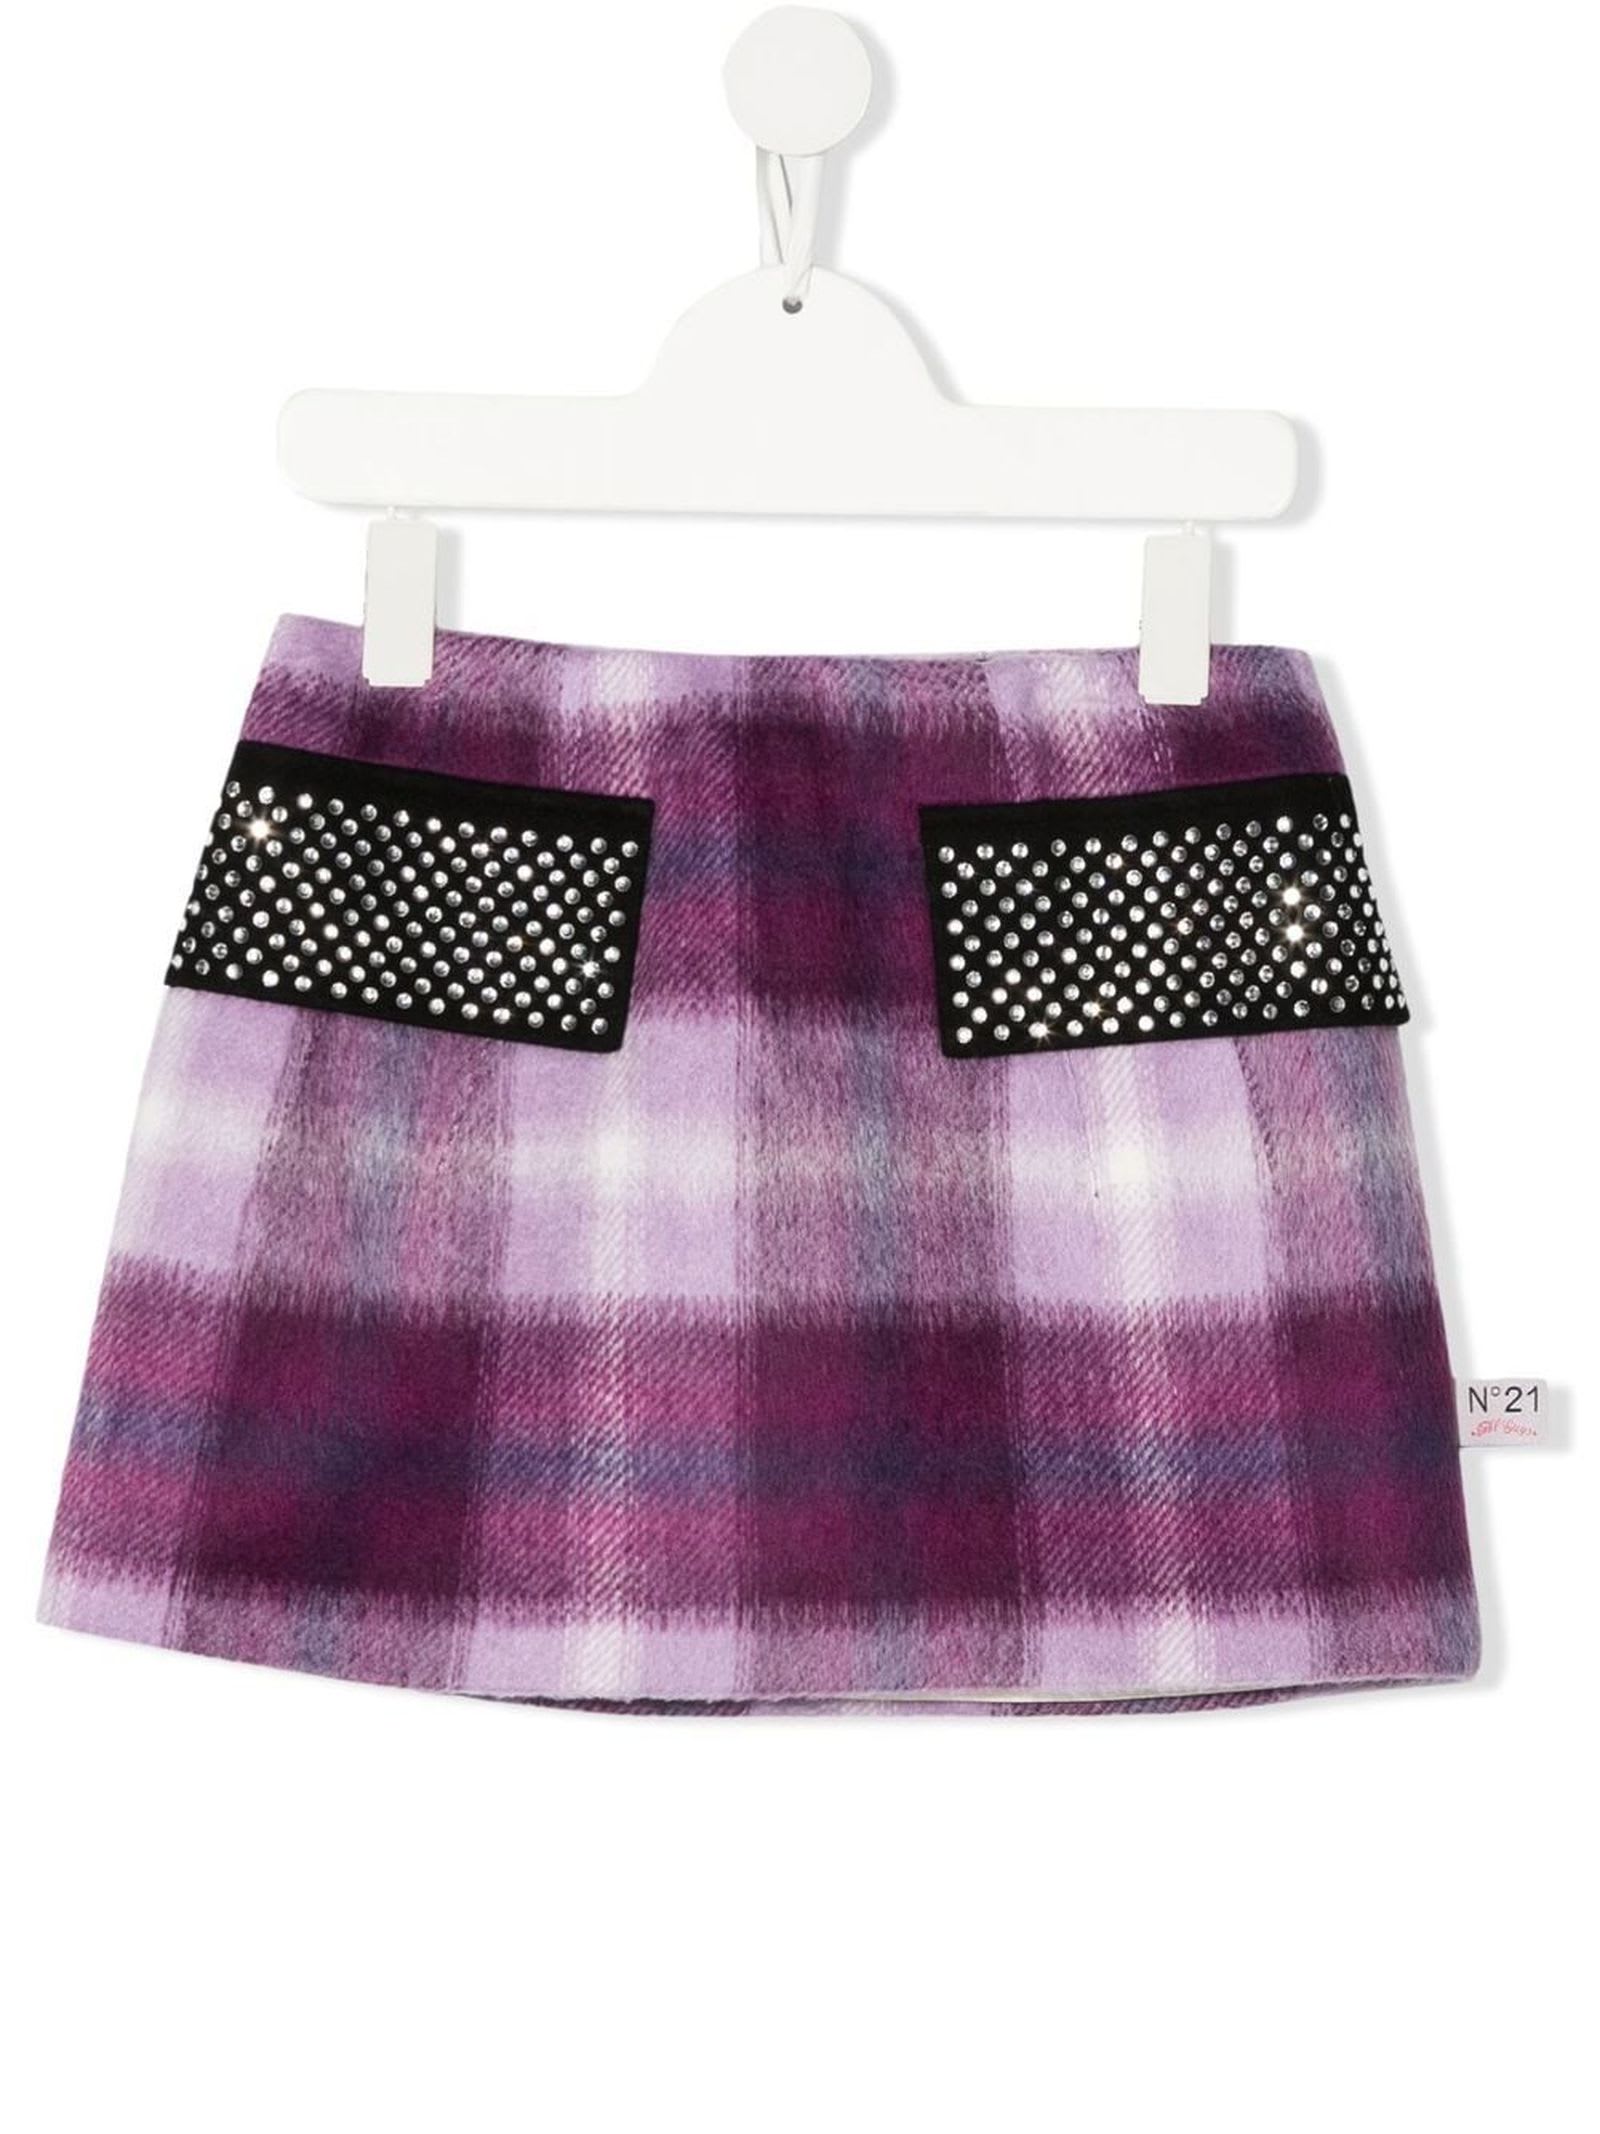 N.21 Violet Polyester Skirt